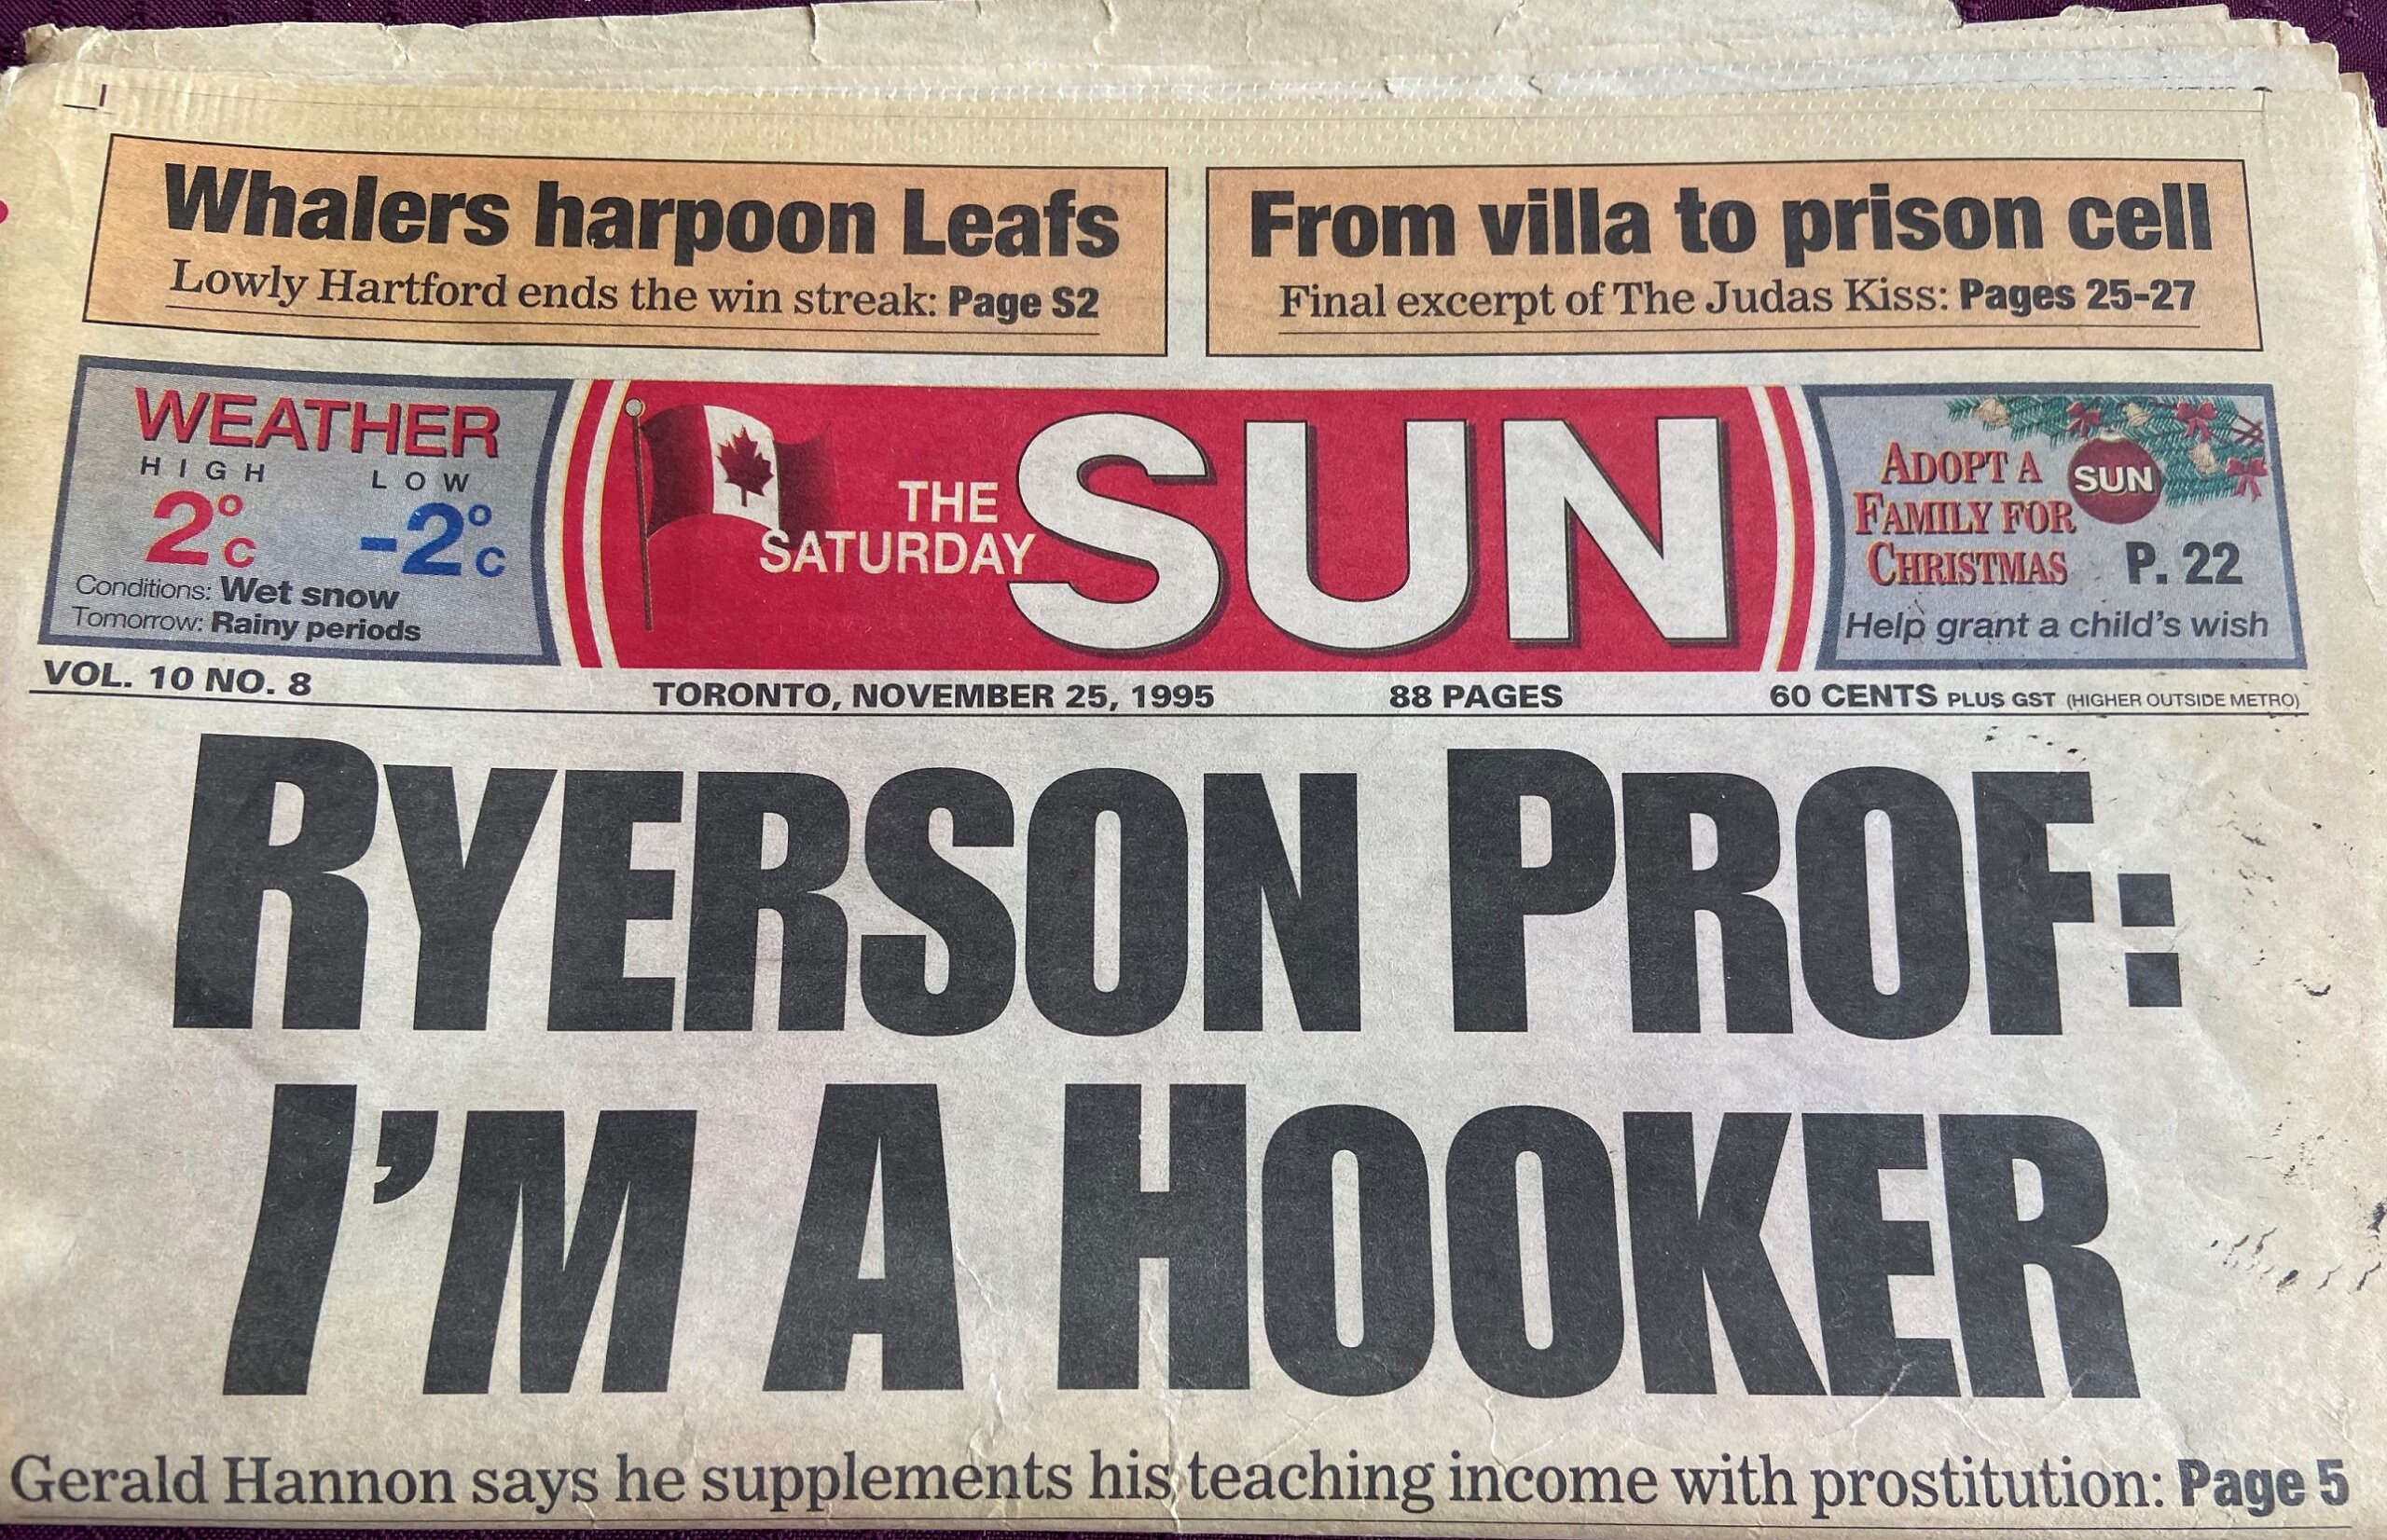 Gerald Hannon headline in Toronto Sun, Ryerson Prof: I'm a Hooker